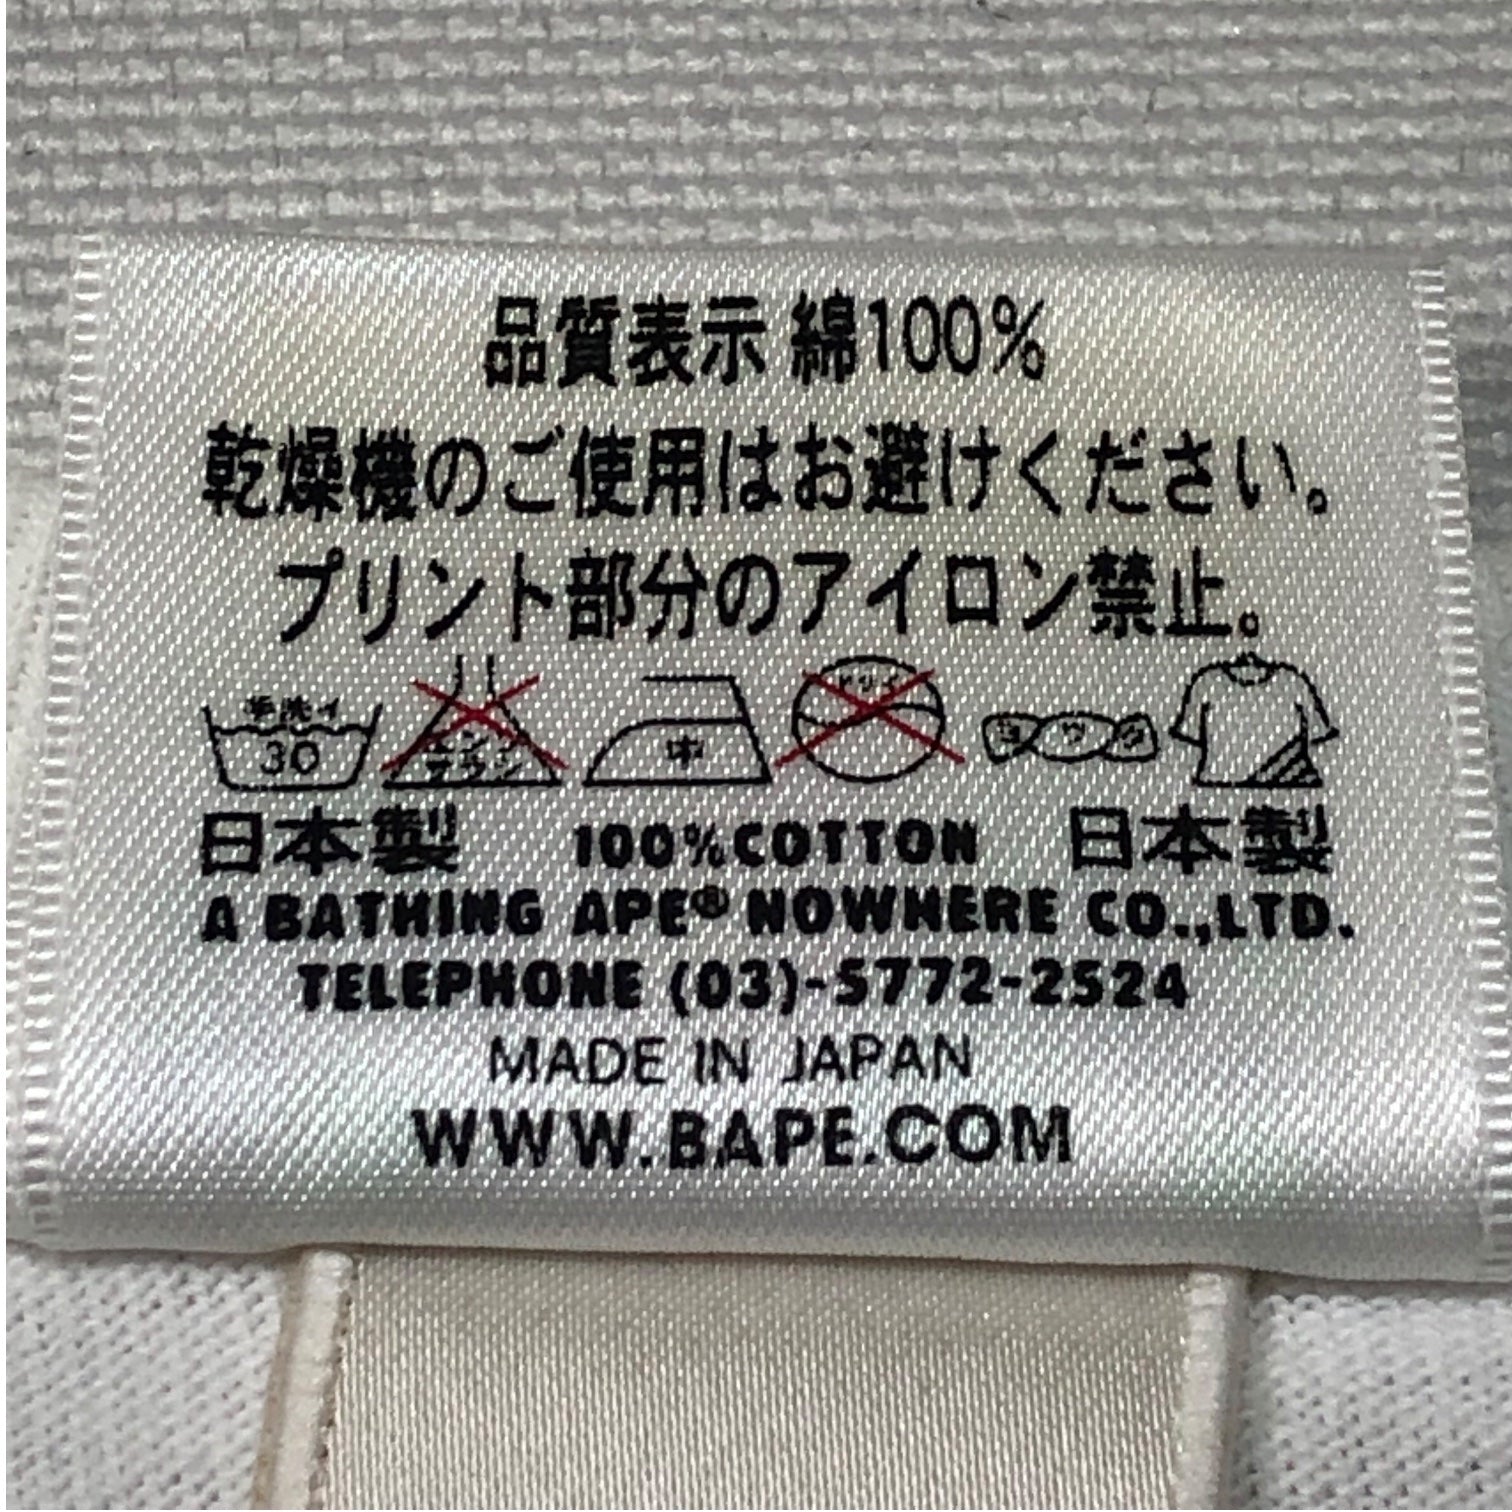 A BATHING APE(アベイシングエイプ) BUSY WORKS Tシャツ SIZE S ホワイト×ブラック